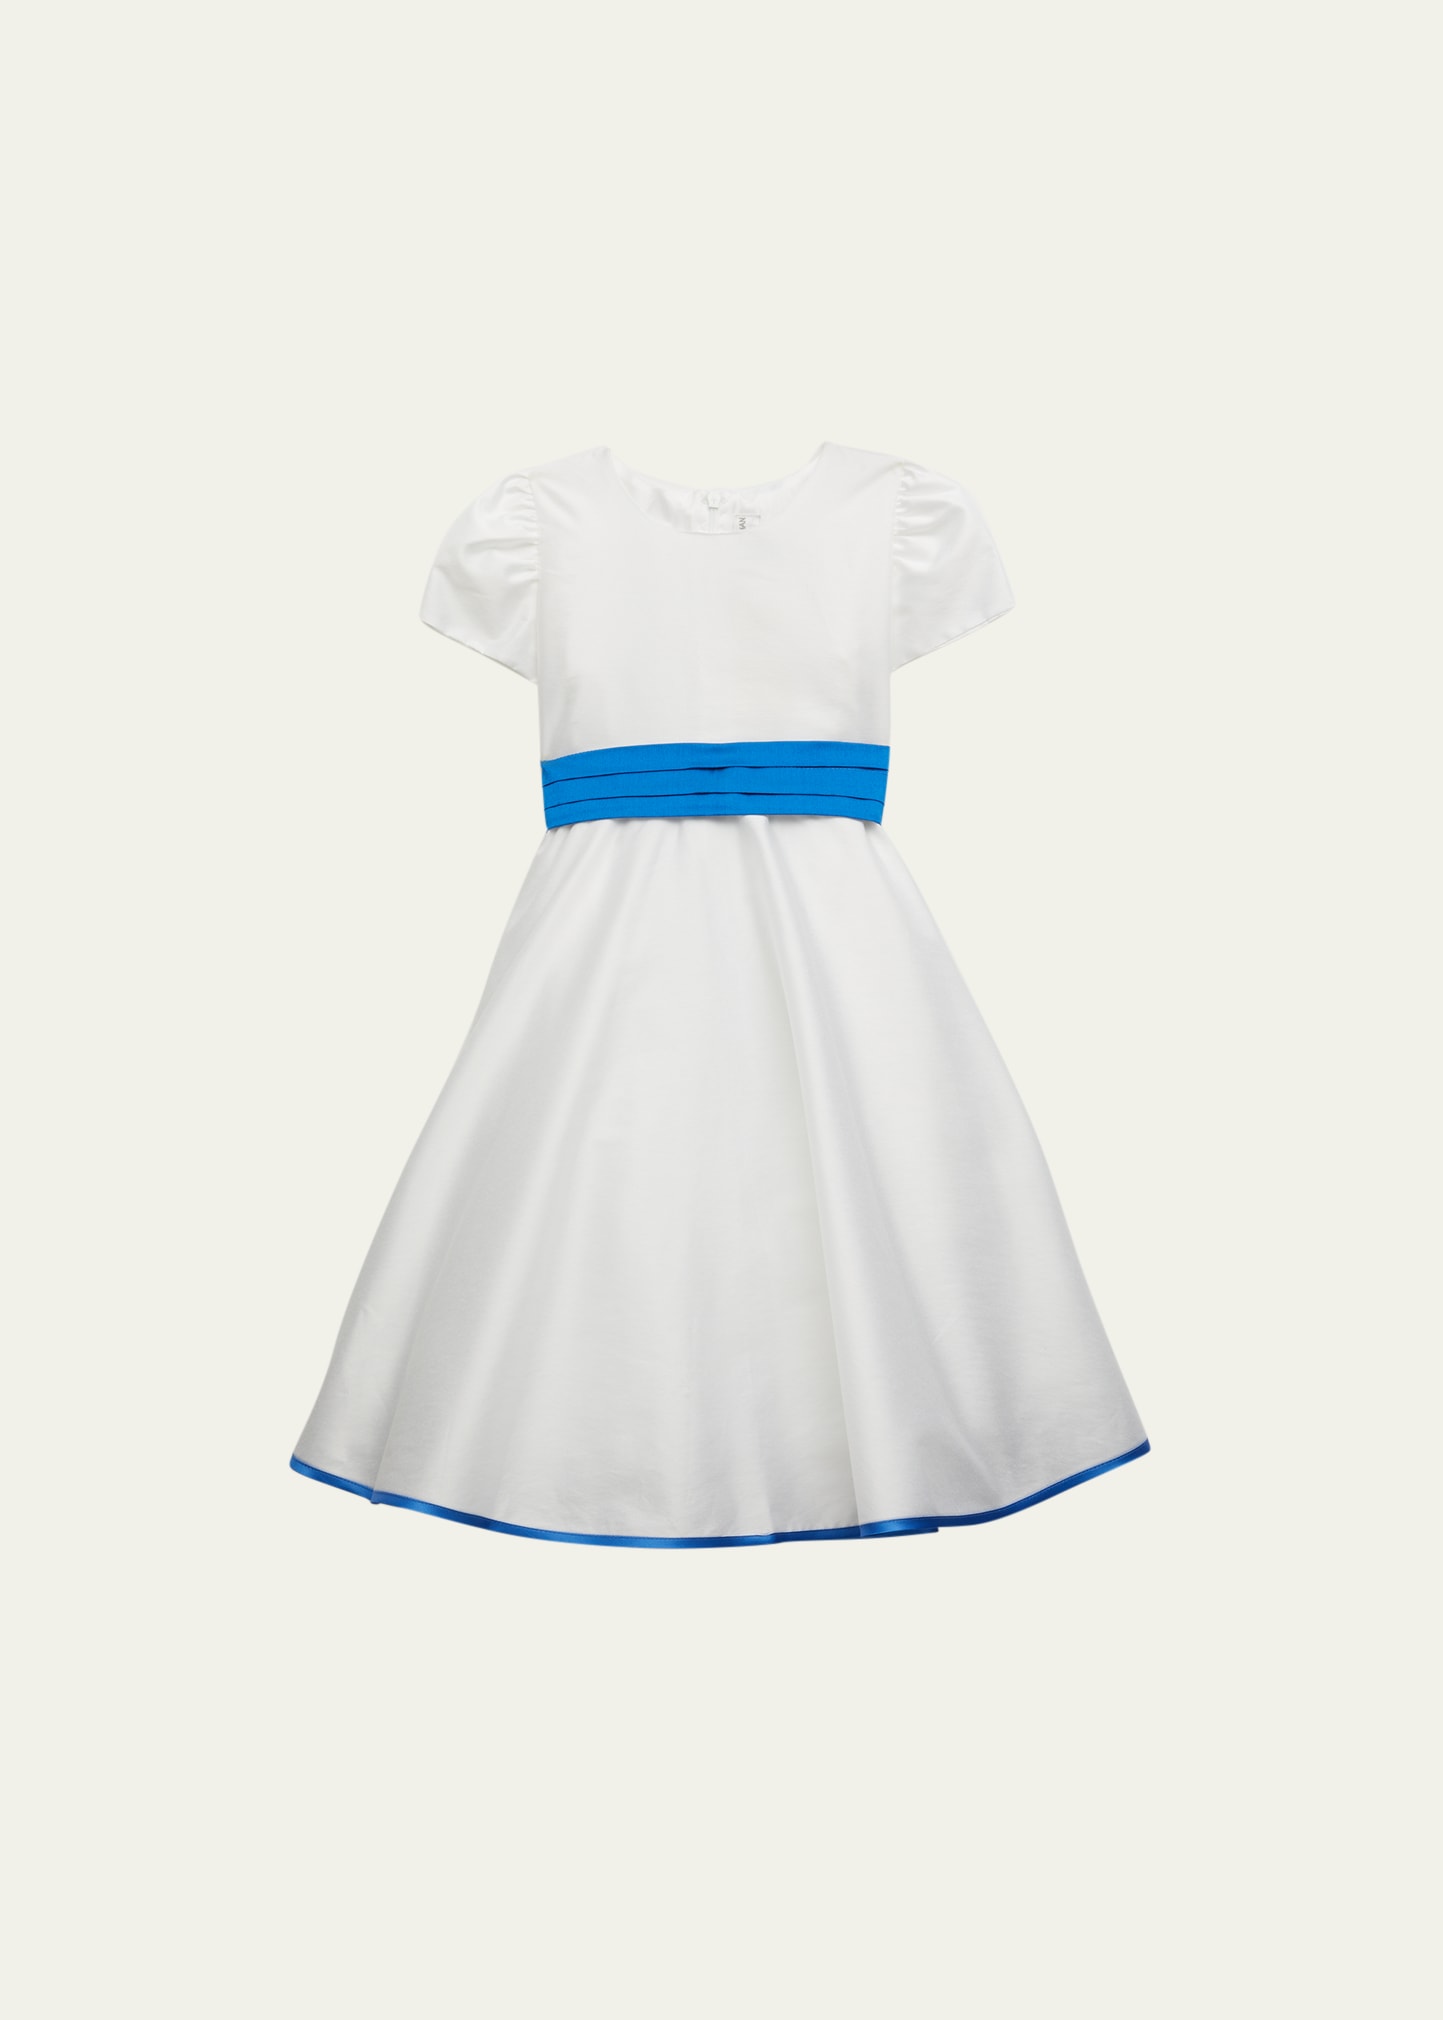 Mariella Ferrari Kids' Girl's A-line Dress With Bow In Blue